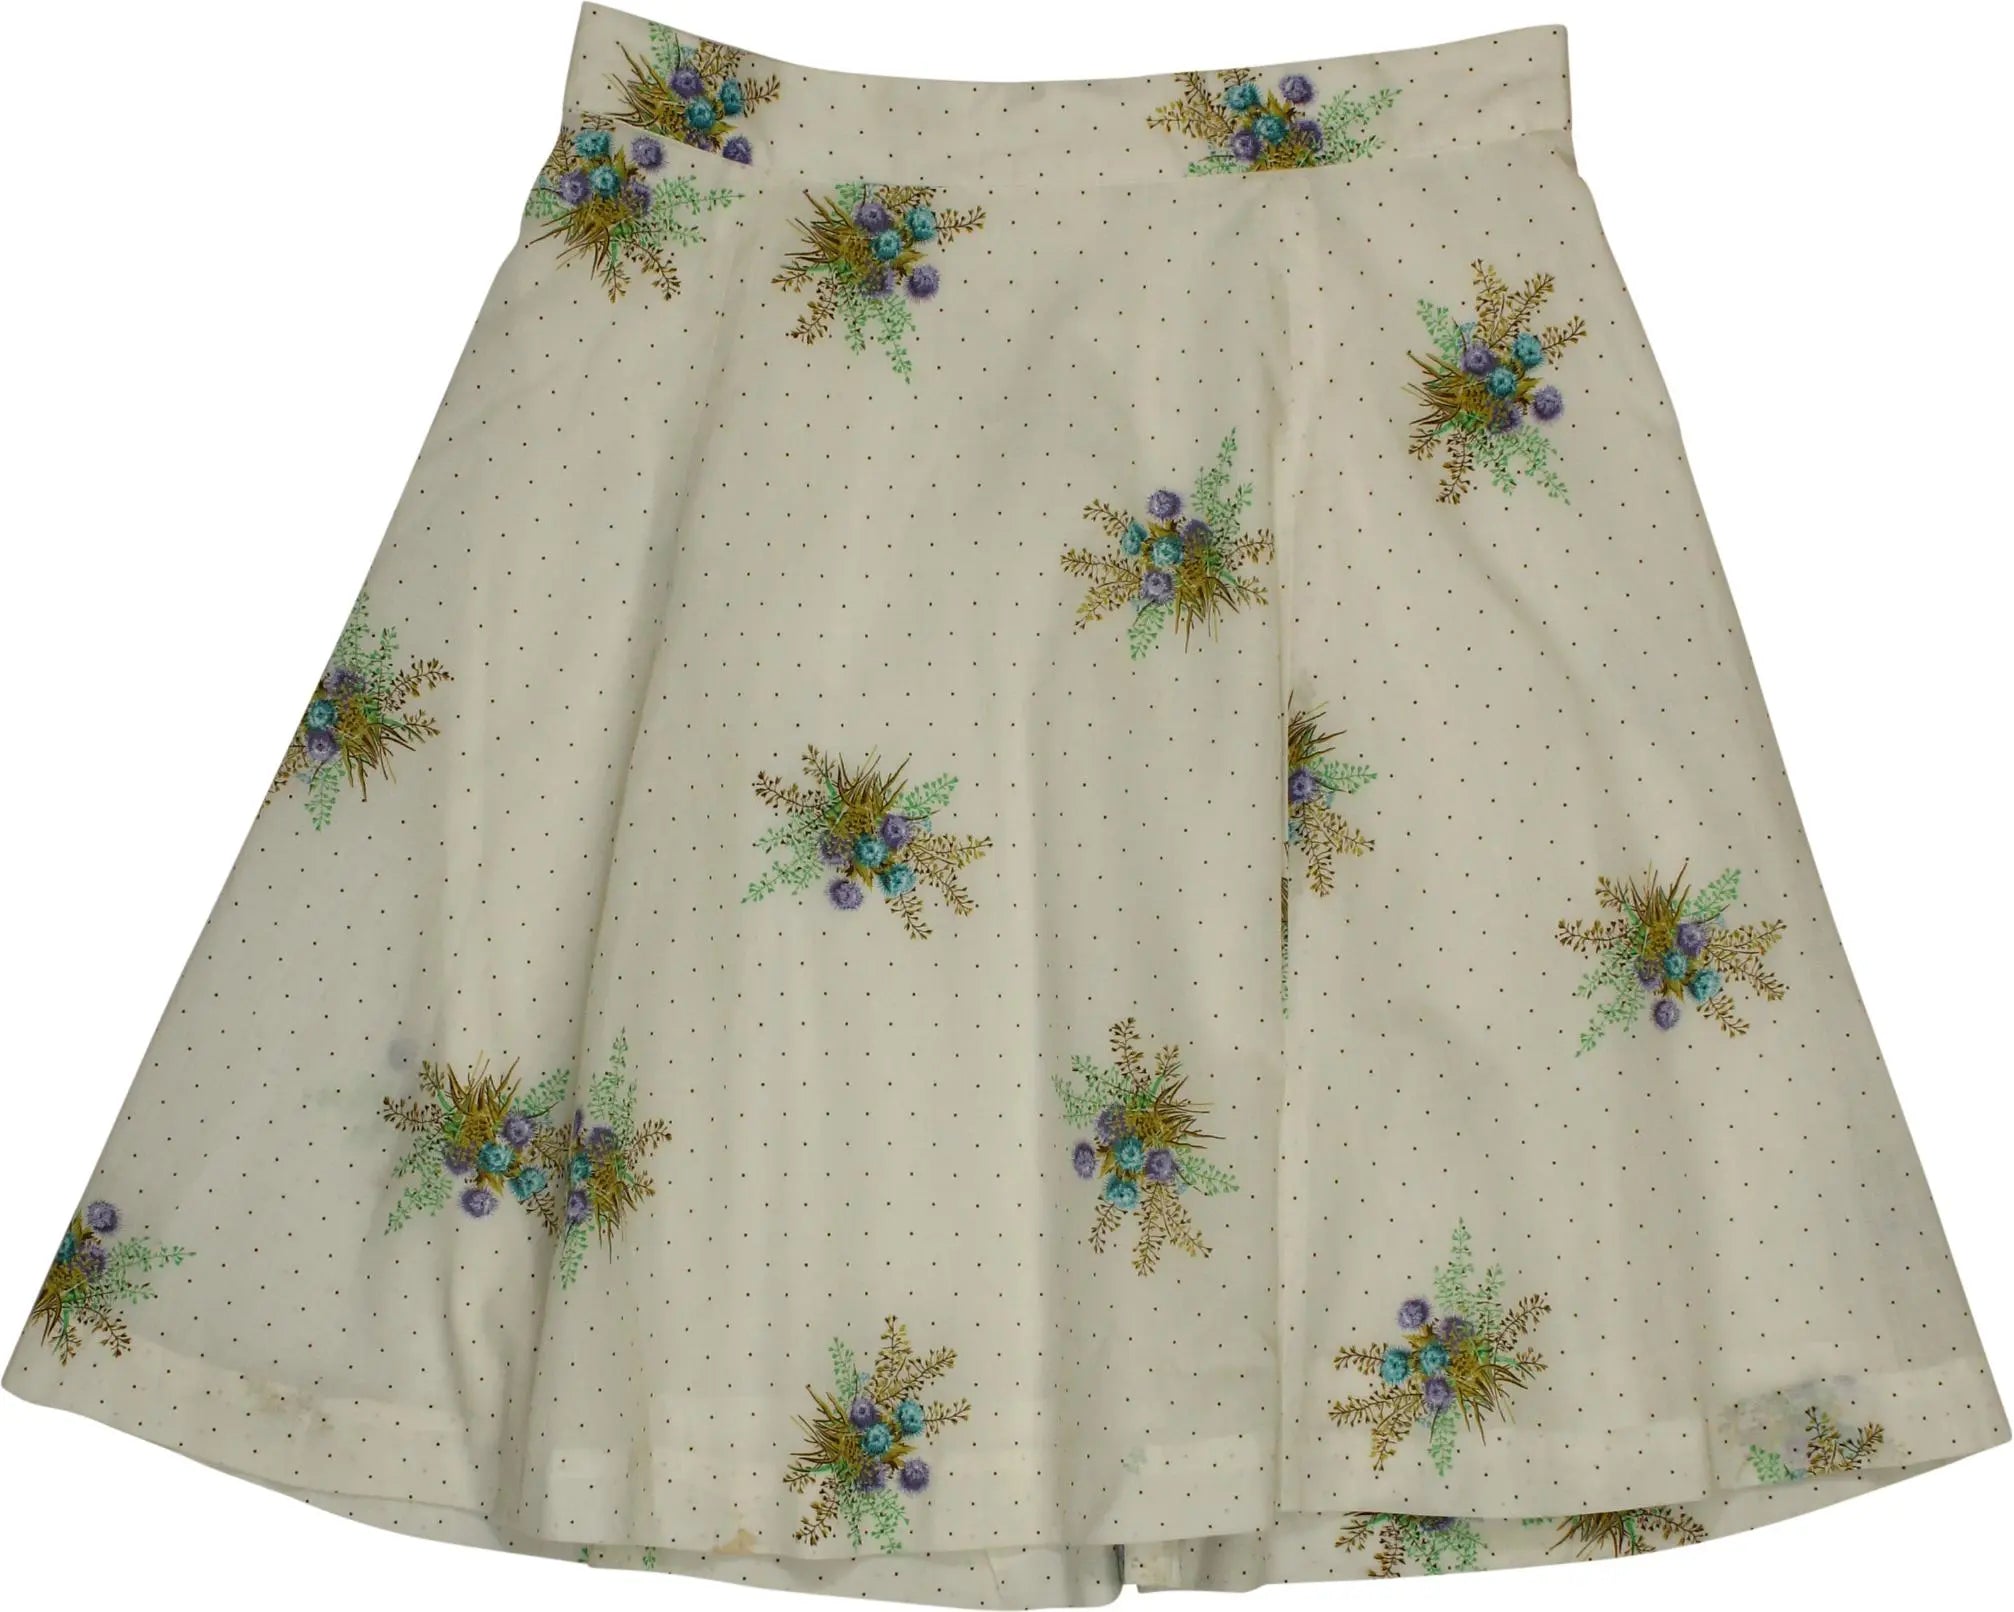 Handmade - Handmade Flower Skirt- ThriftTale.com - Vintage and second handclothing